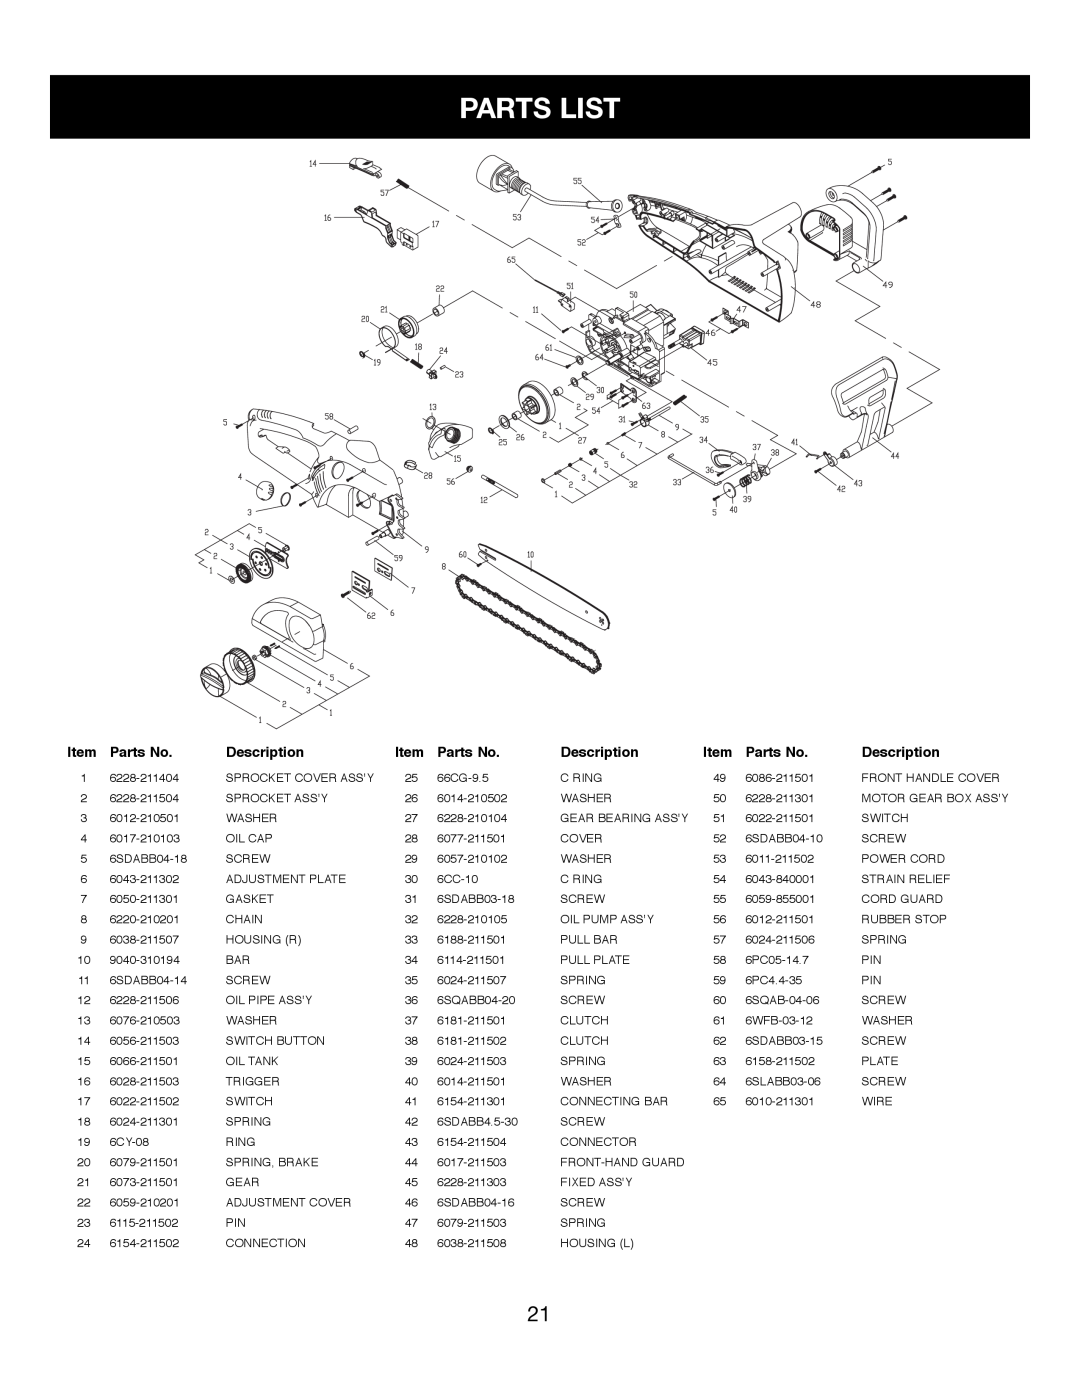 Craftsman 316.34107 manual Parts List, Parts No, Description 